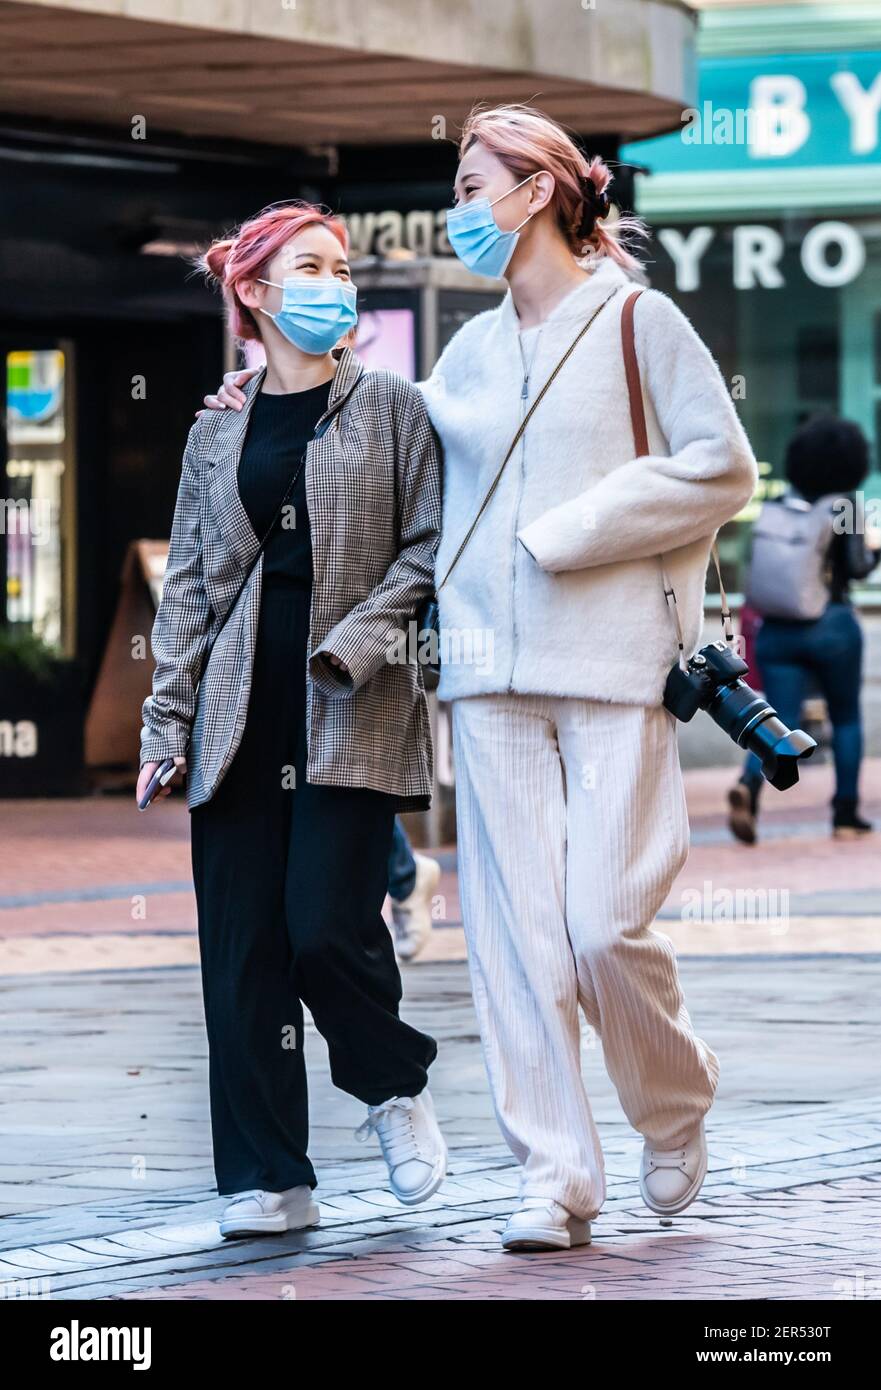 Birmingham, United Kingdom, UK. 28th February 2021: A couple of women walking merrily along in Birmingham City Centre, as lockdown continues. Credit: Ryan Underwood / Alamy Live News Stock Photo